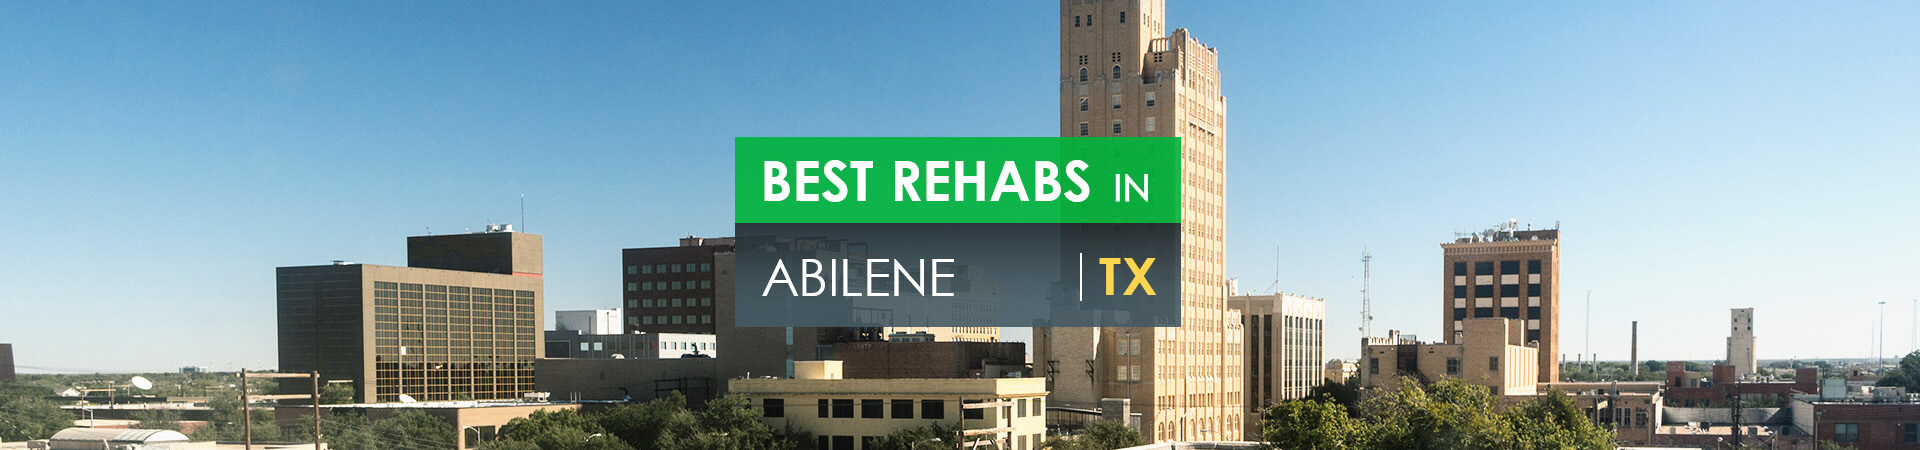 Best rehabs in Abilene, TX